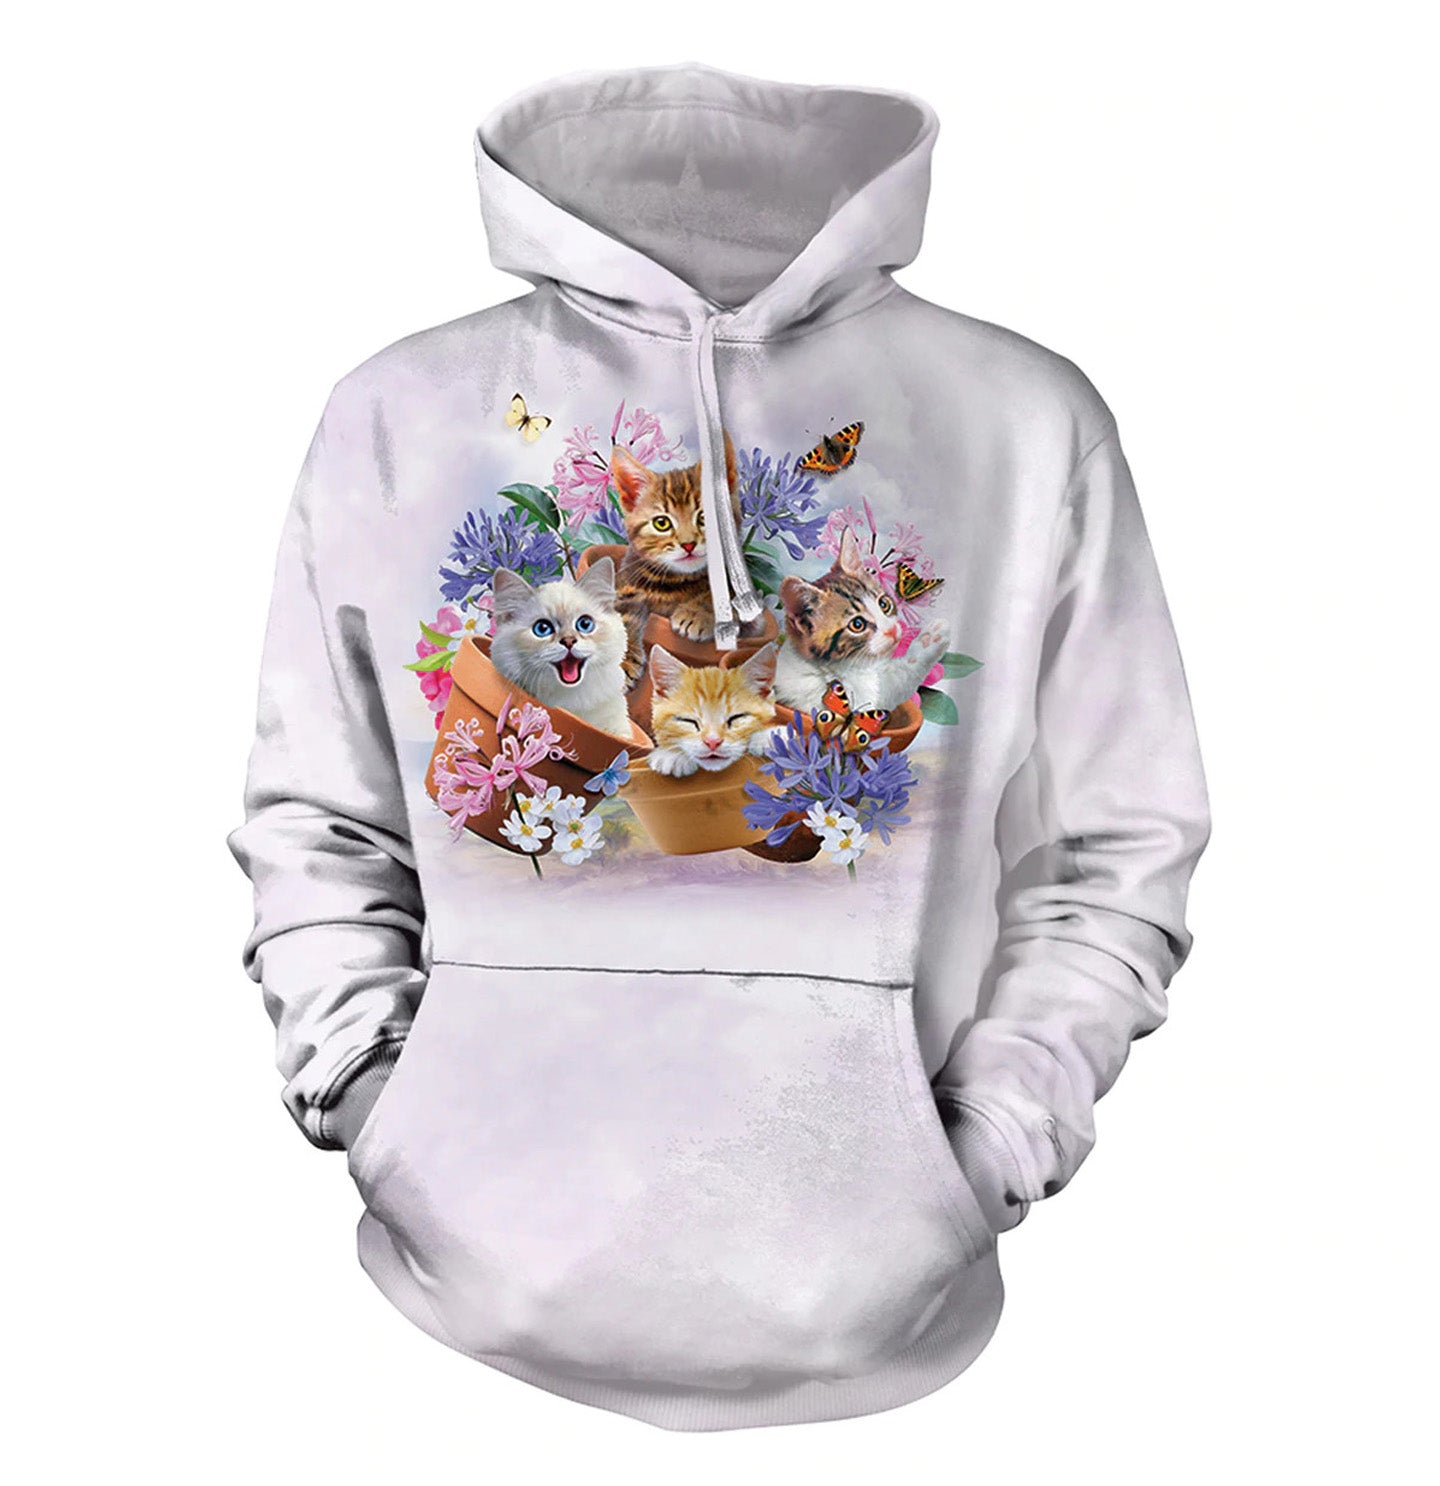 The Mountain - Garden Wonders - Adult Unisex Hoodie Sweatshirt